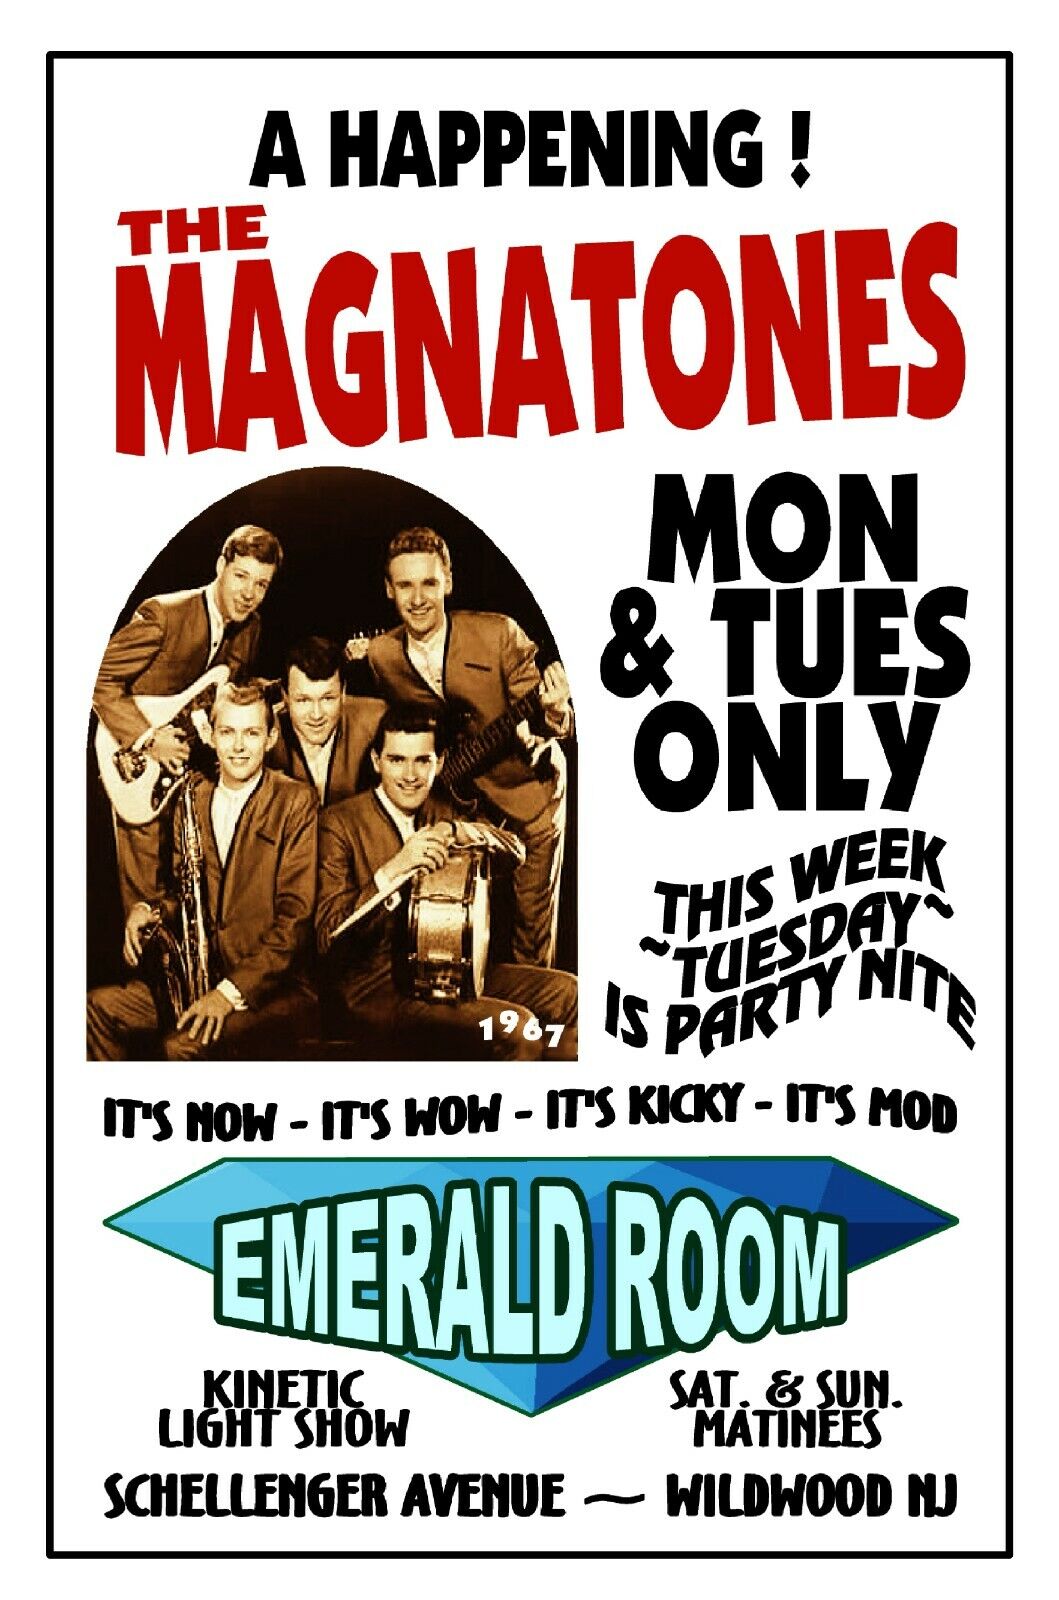 THE MAGNATONES 1967 Gig Poster  Wildwood NJ EMERALD ROOM Nightclub  POSTERS